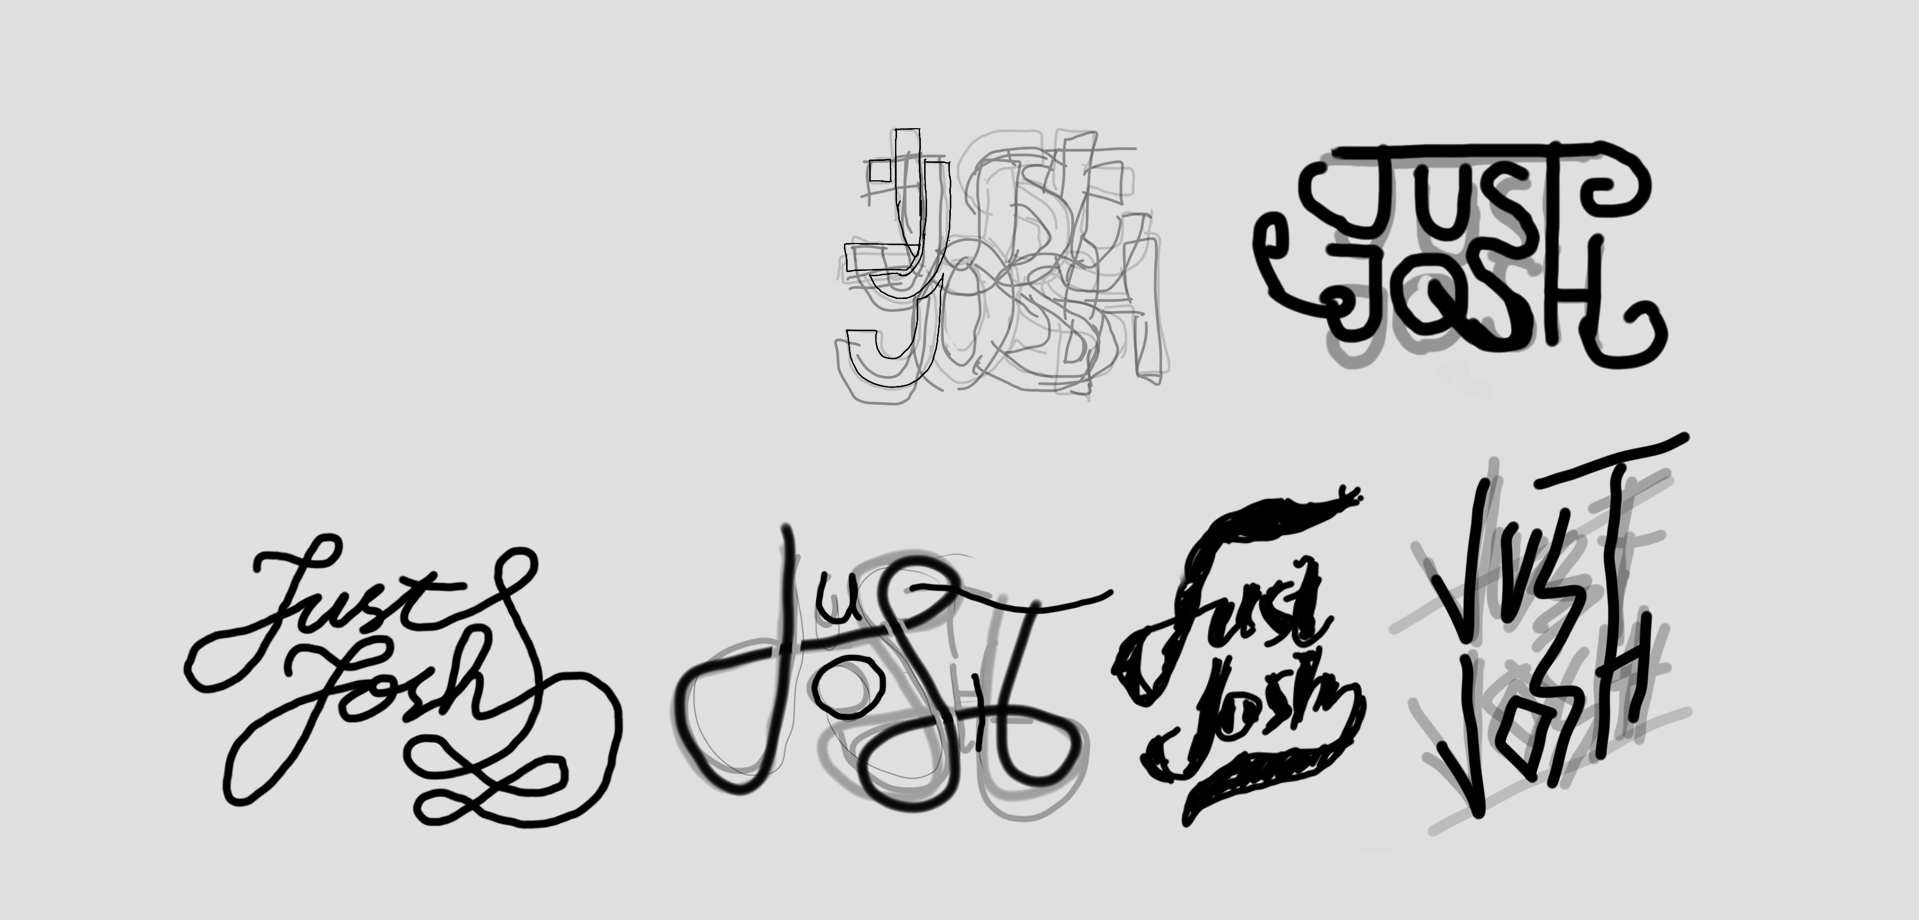 Josh Darmawan creates Kid Zoo logo thumbnails to gather ideas